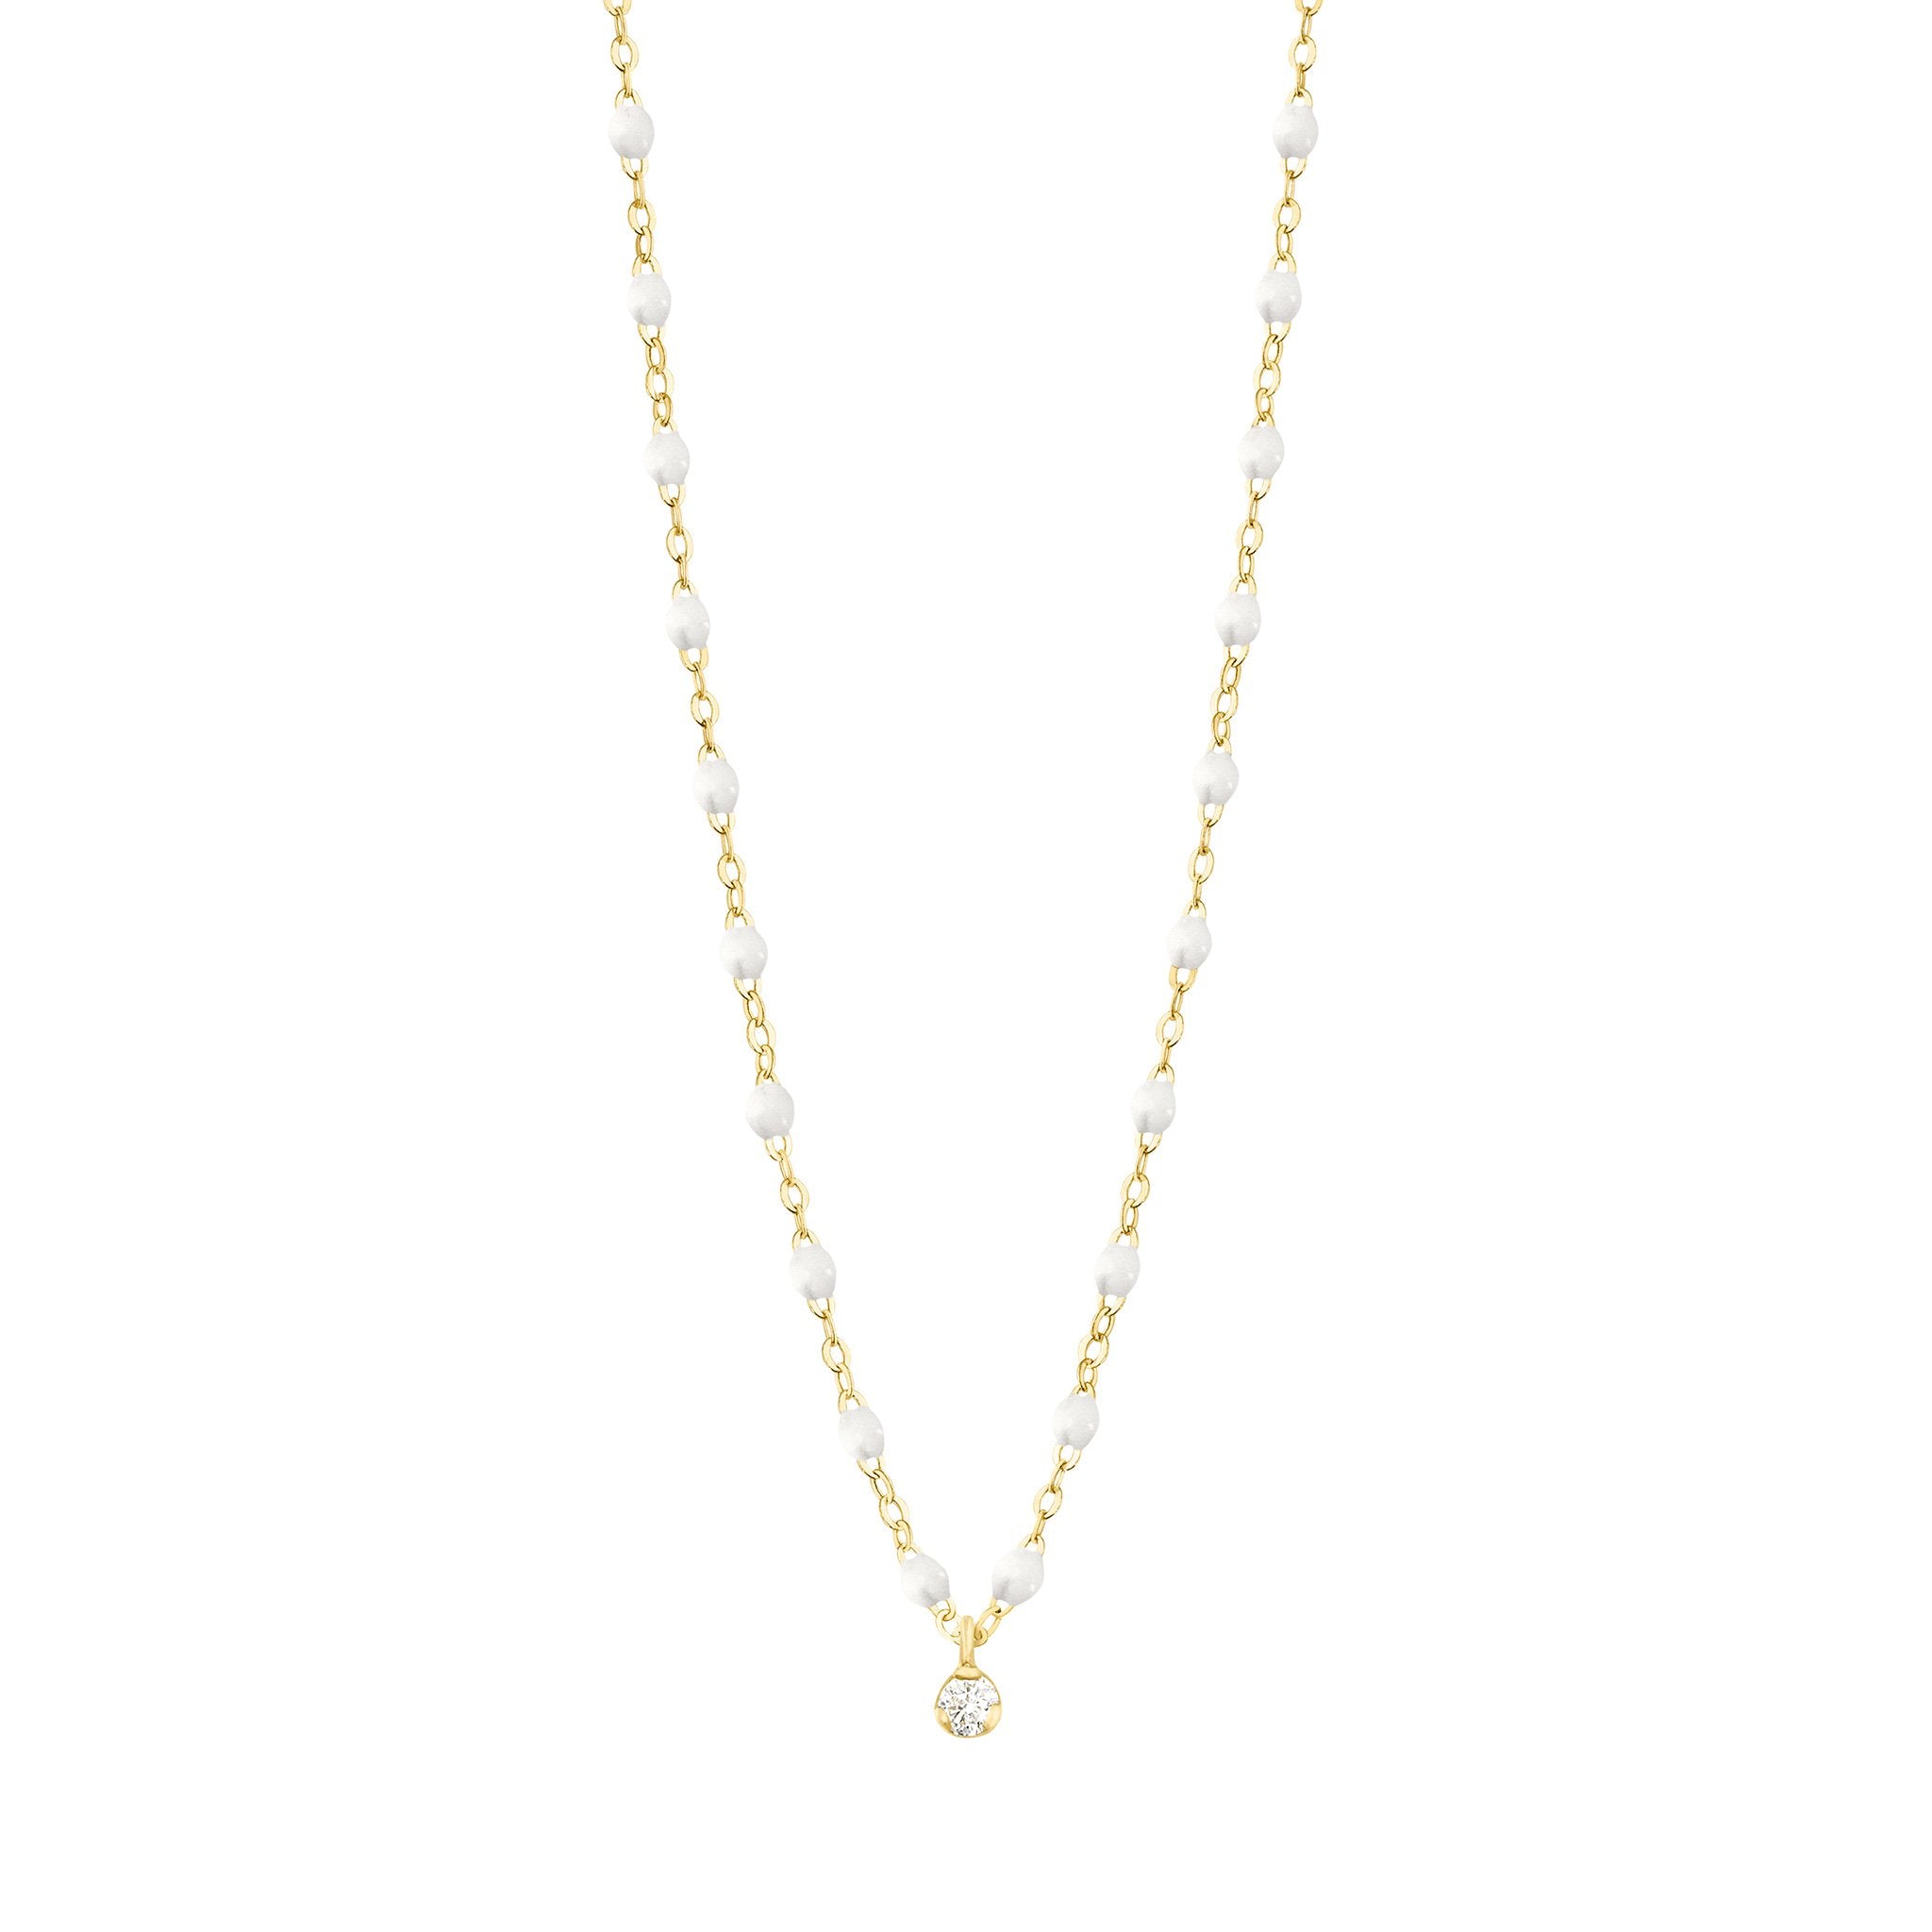 Gigi Supreme Classic 1 Diamond Necklace, White, Yellow Gold, 16.5